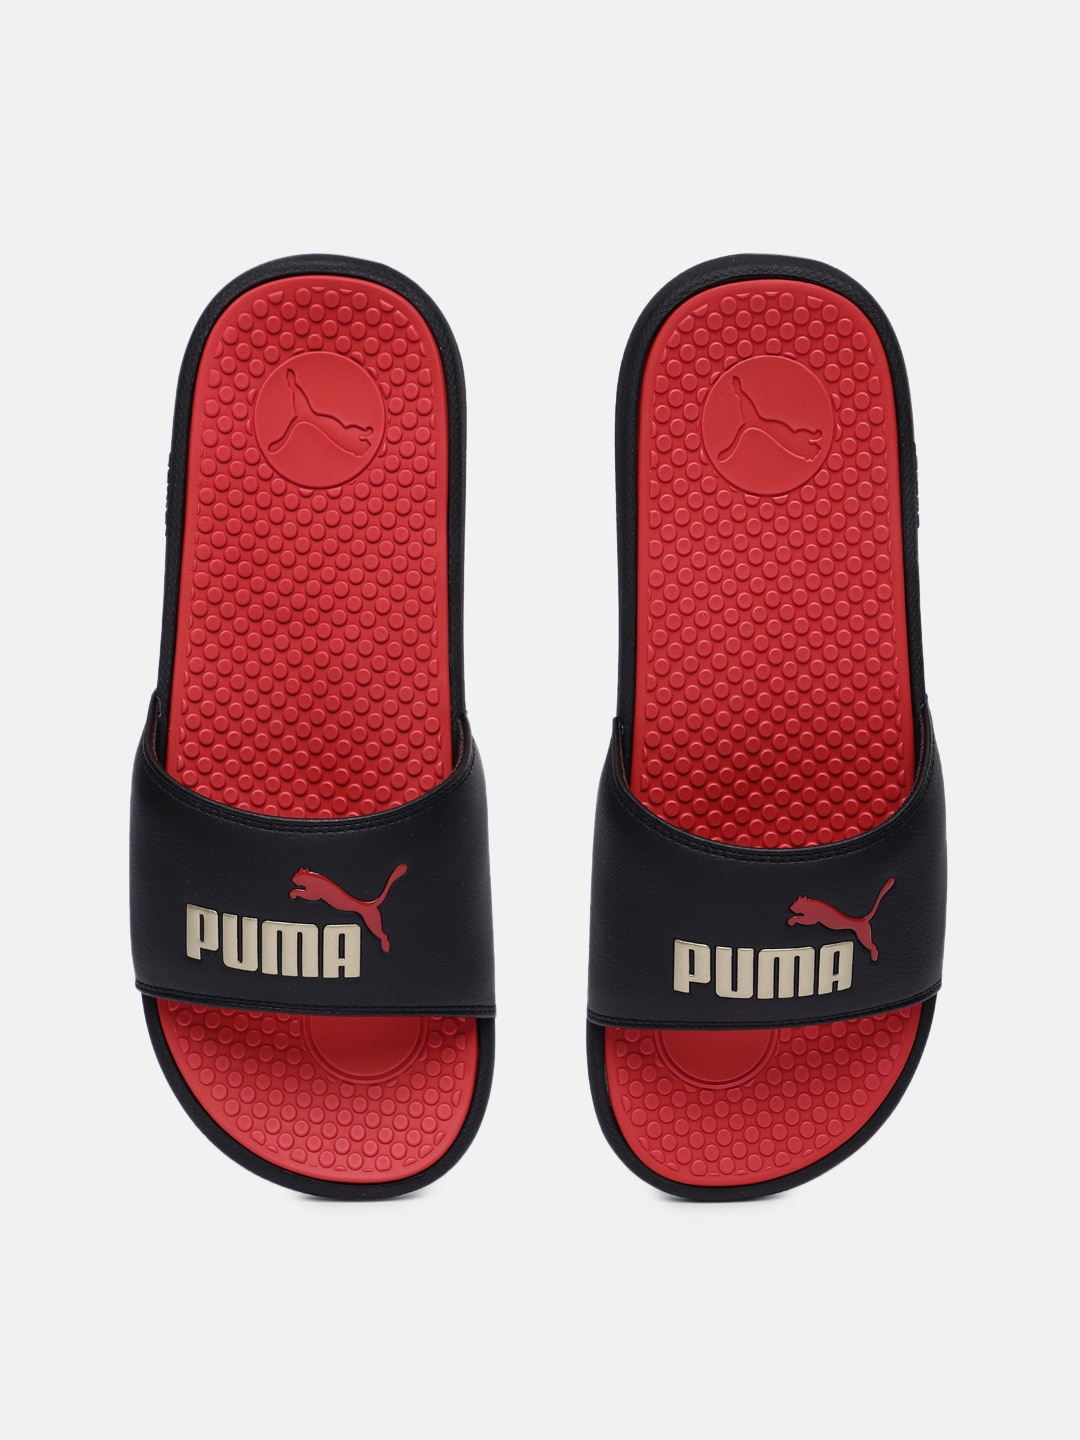 Puma Women Black & Red Cool Cat Printed Sliders Price in India